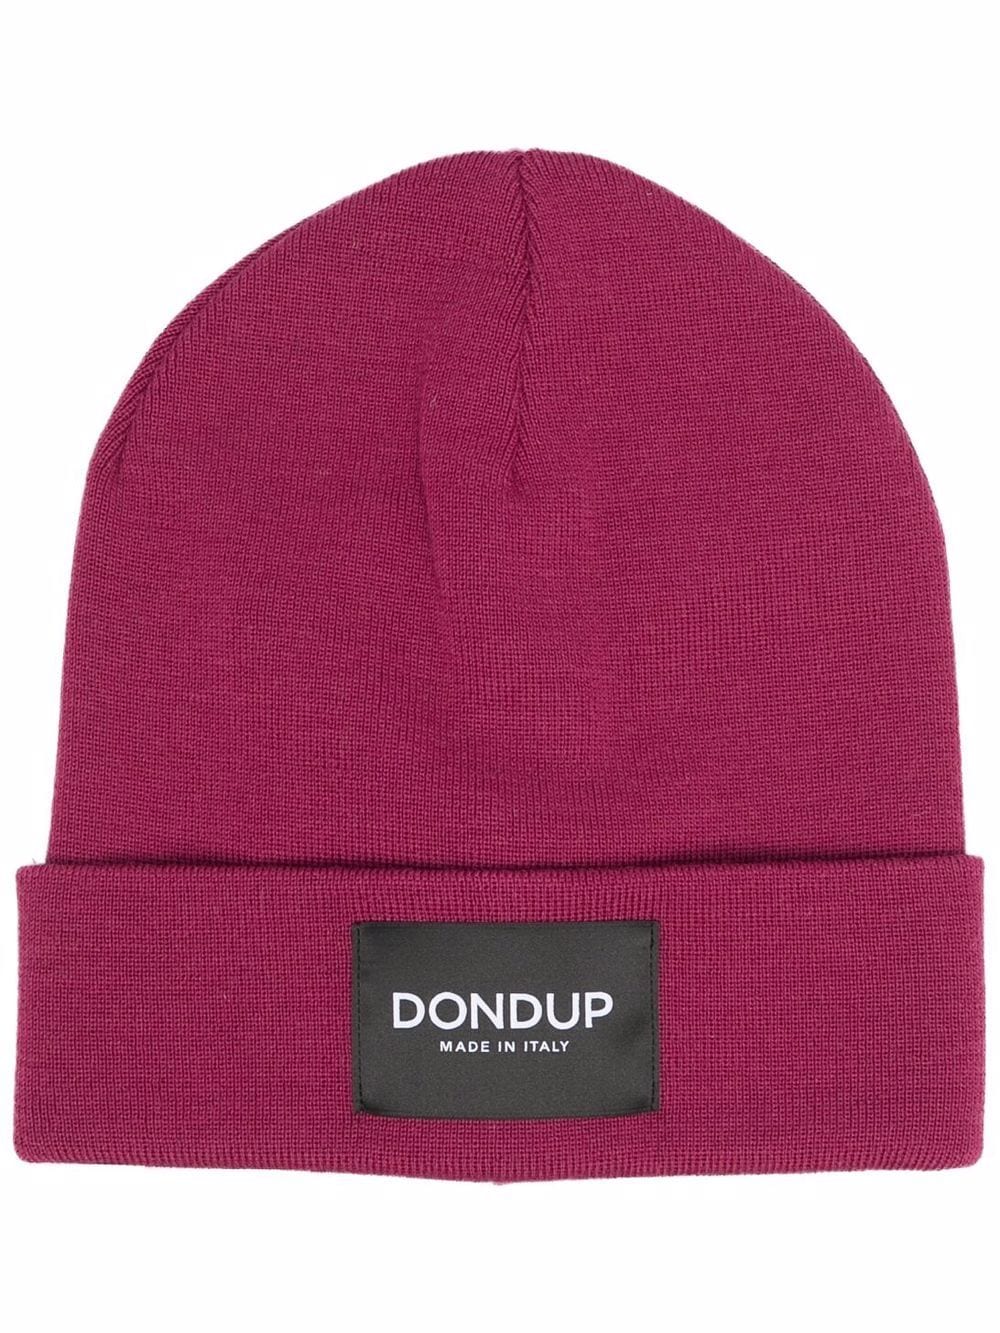 фото Dondup шапка бини с логотипом